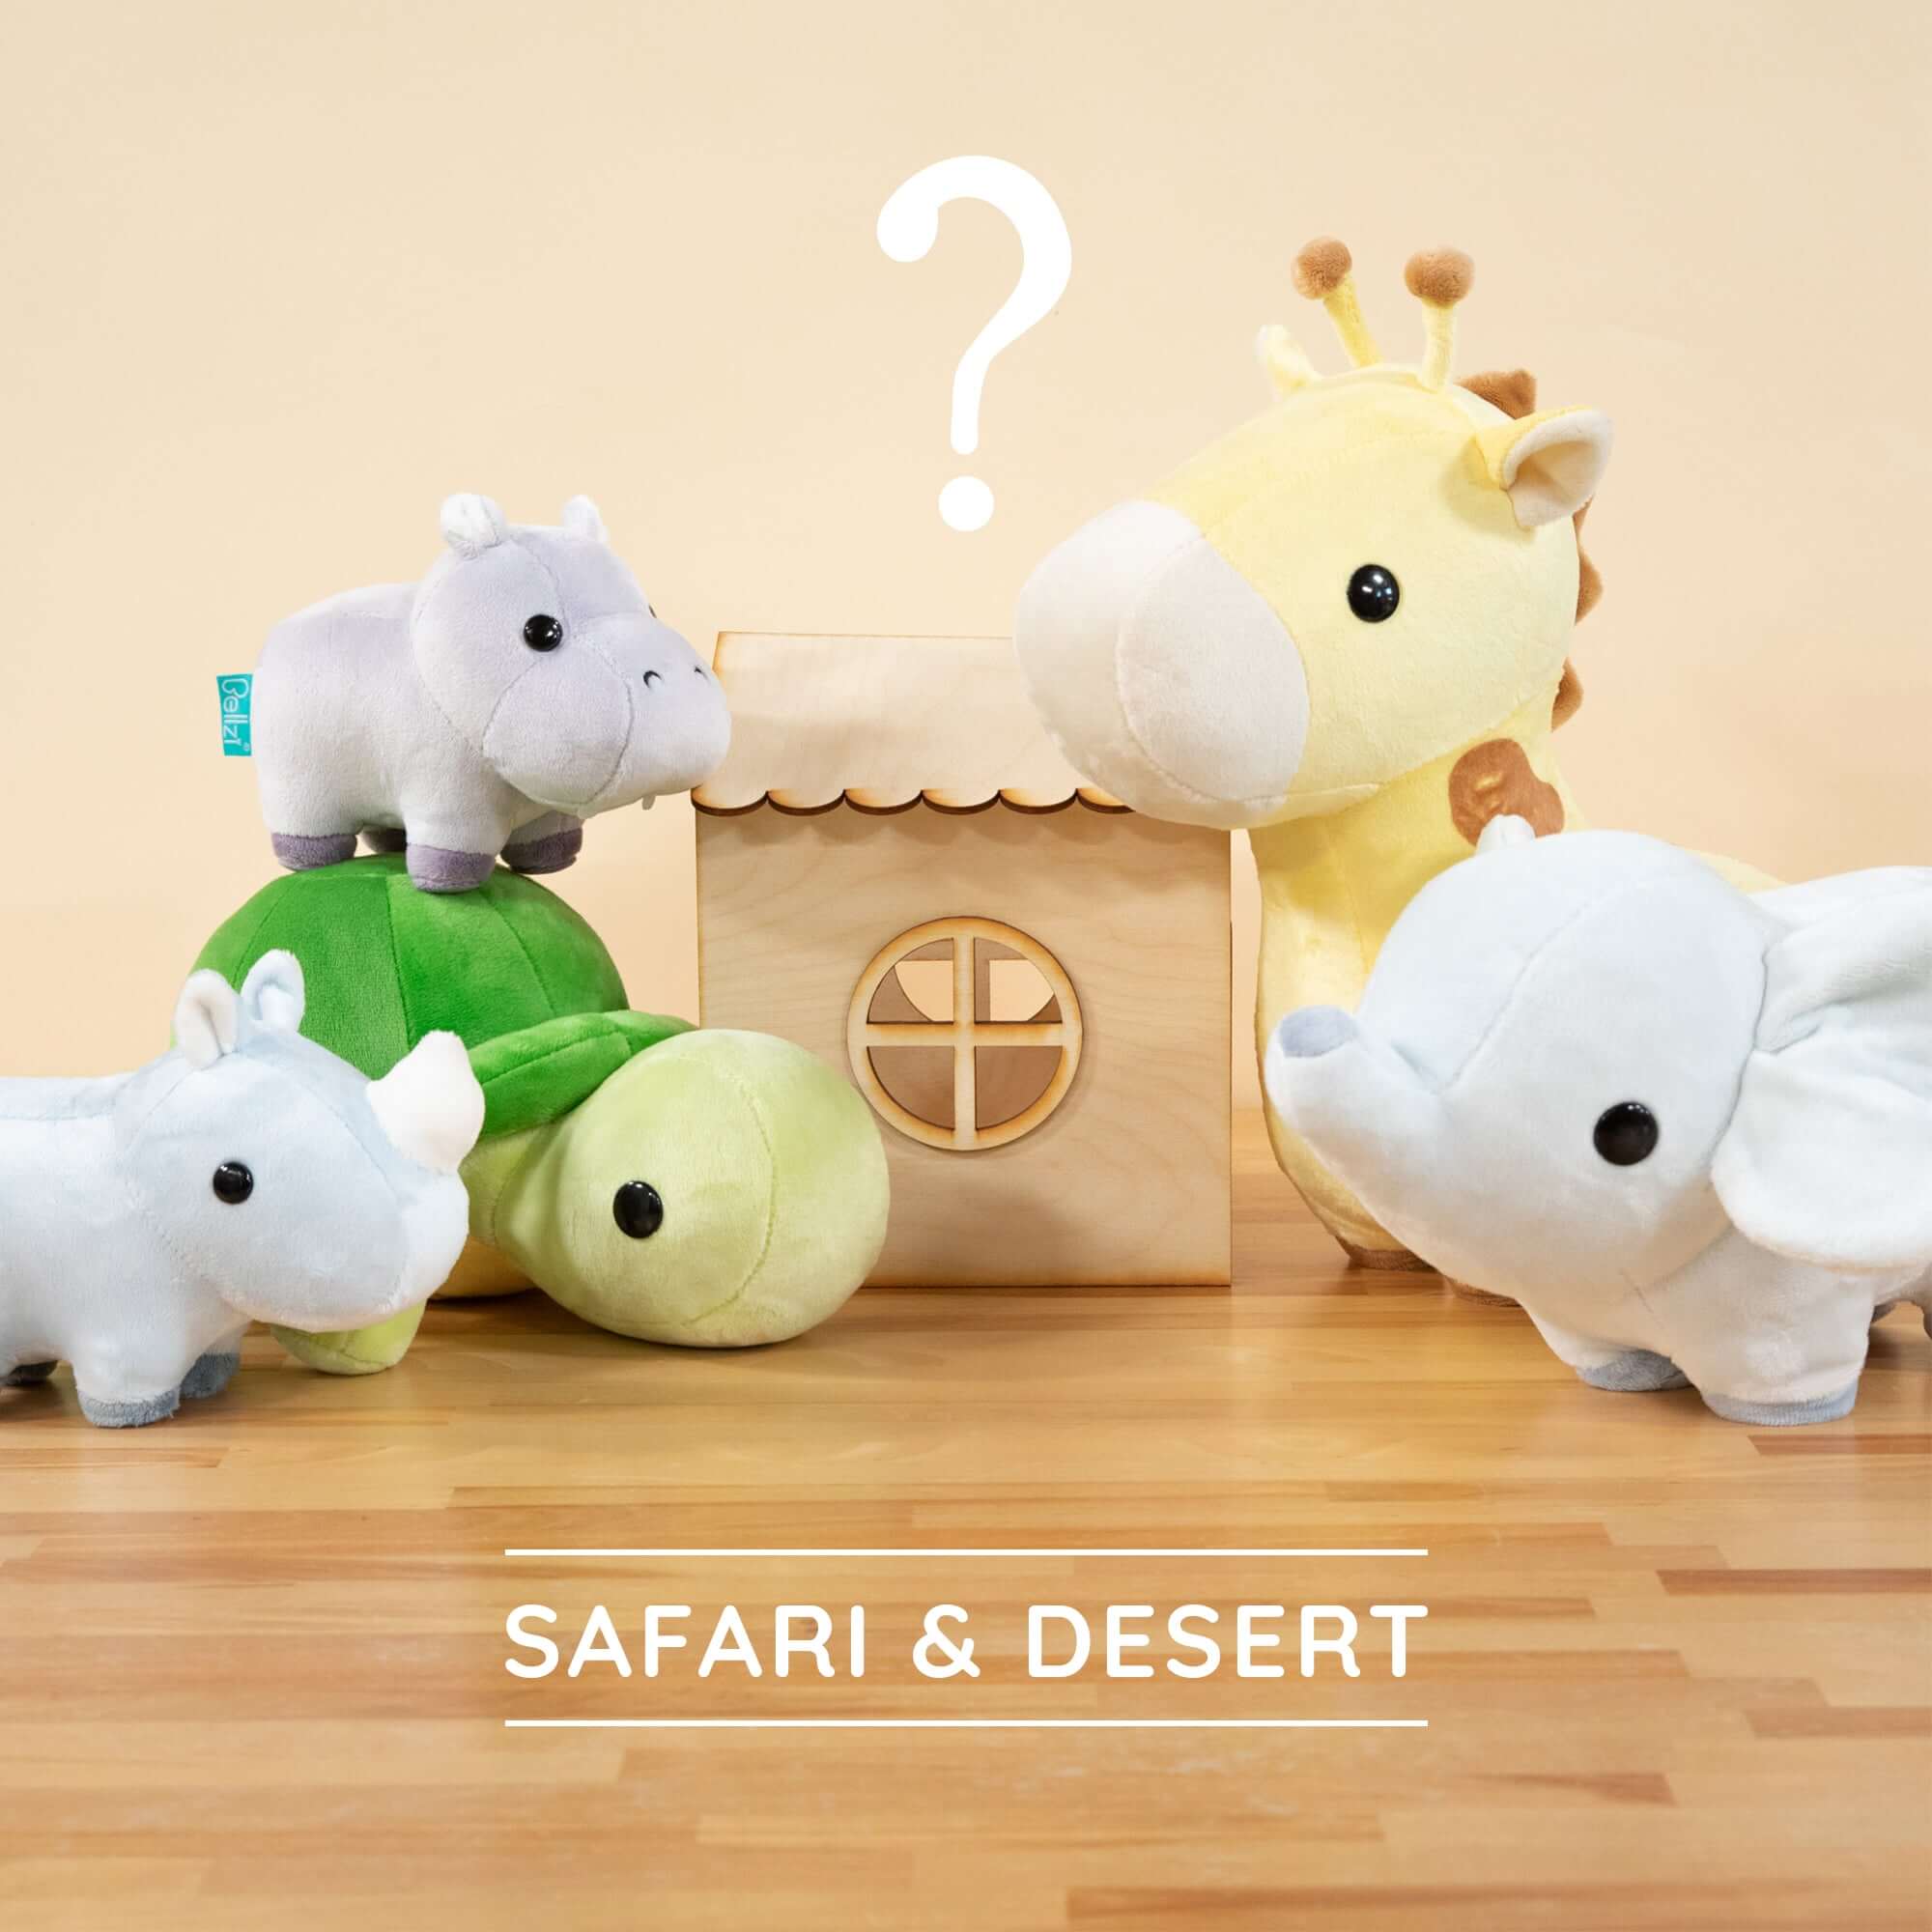 Safari & Desert Plushies Mystery Bag Plush Stuffed Animal by Bellzi